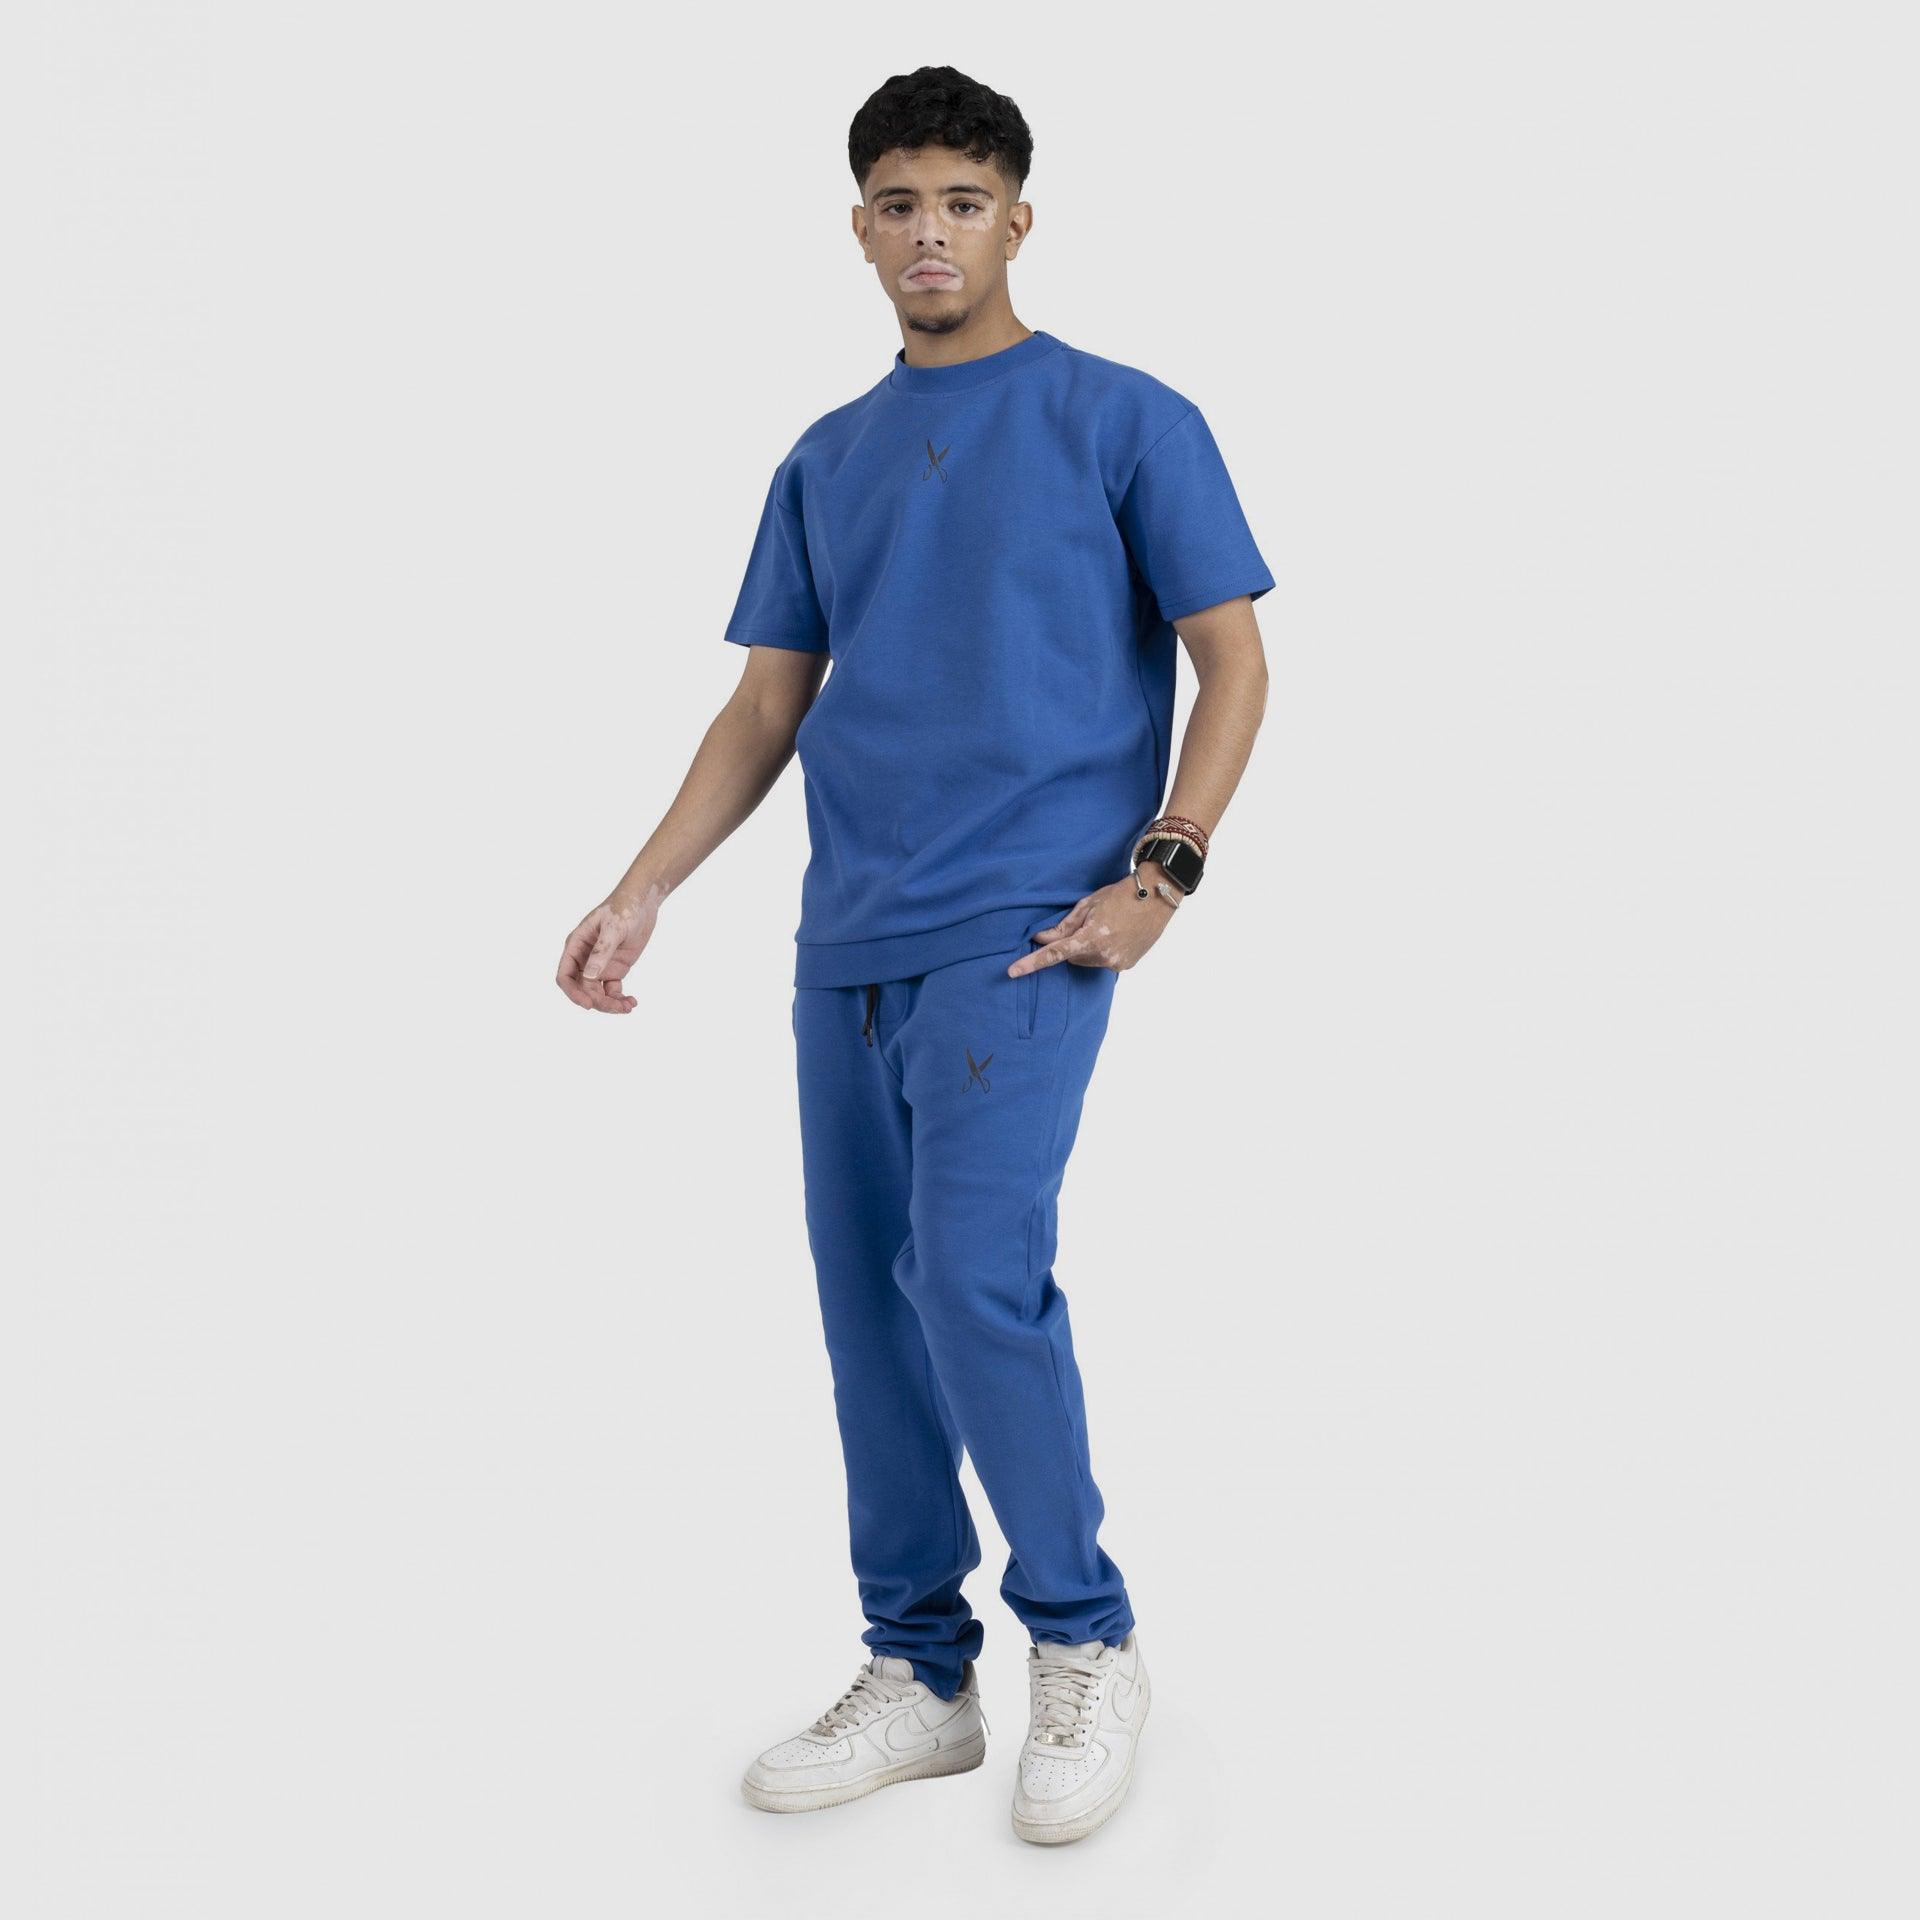 Blue Men Pants From Weaver Design - WECRE8